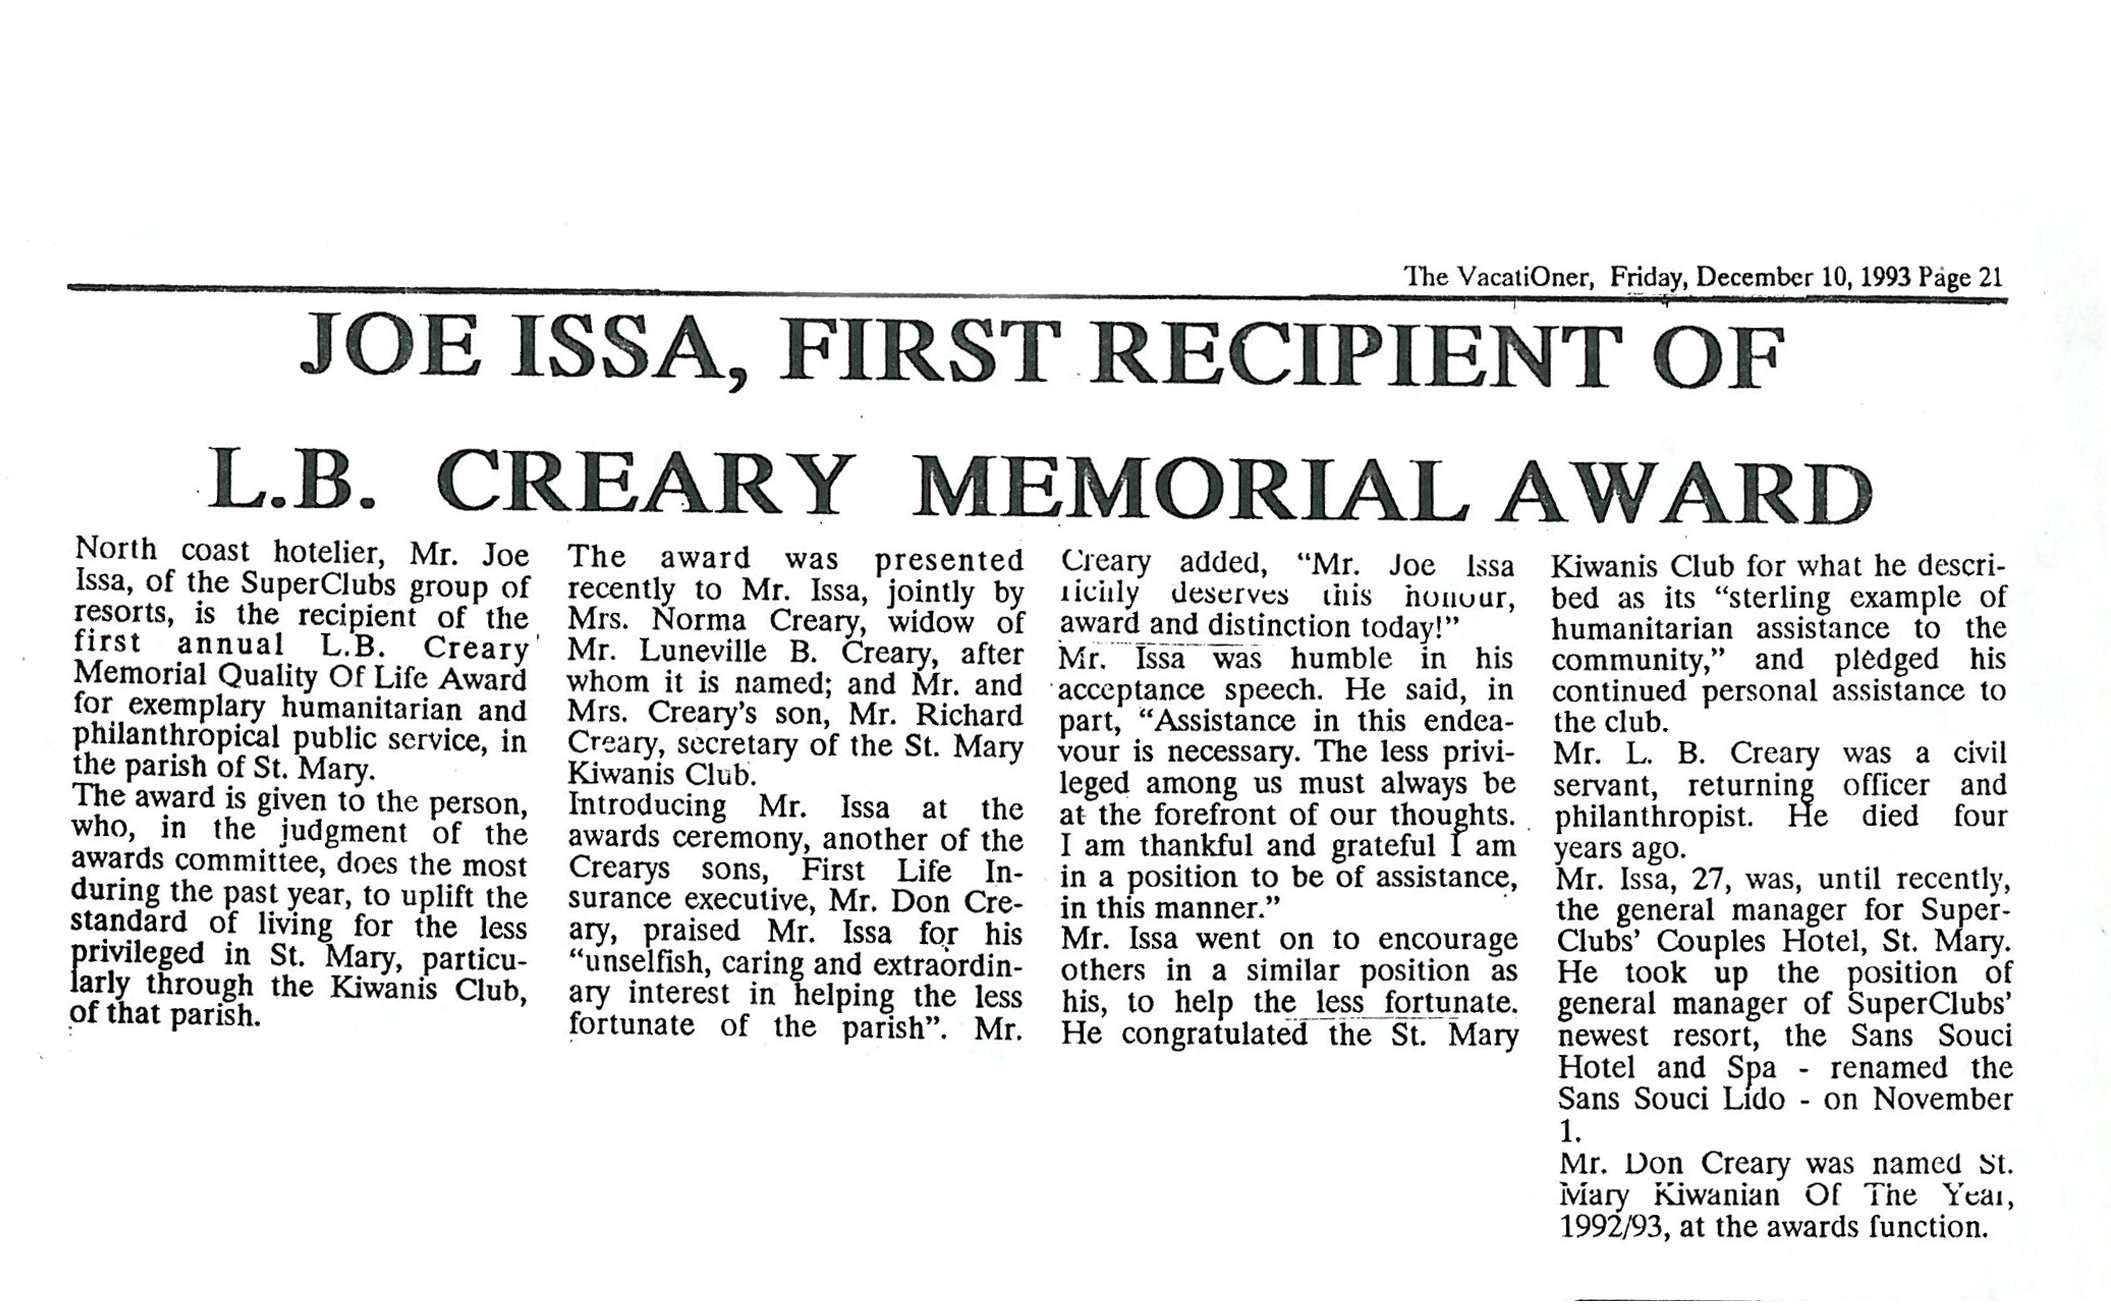 Joe Issa, first recipient of L.B Creary Memorial Award